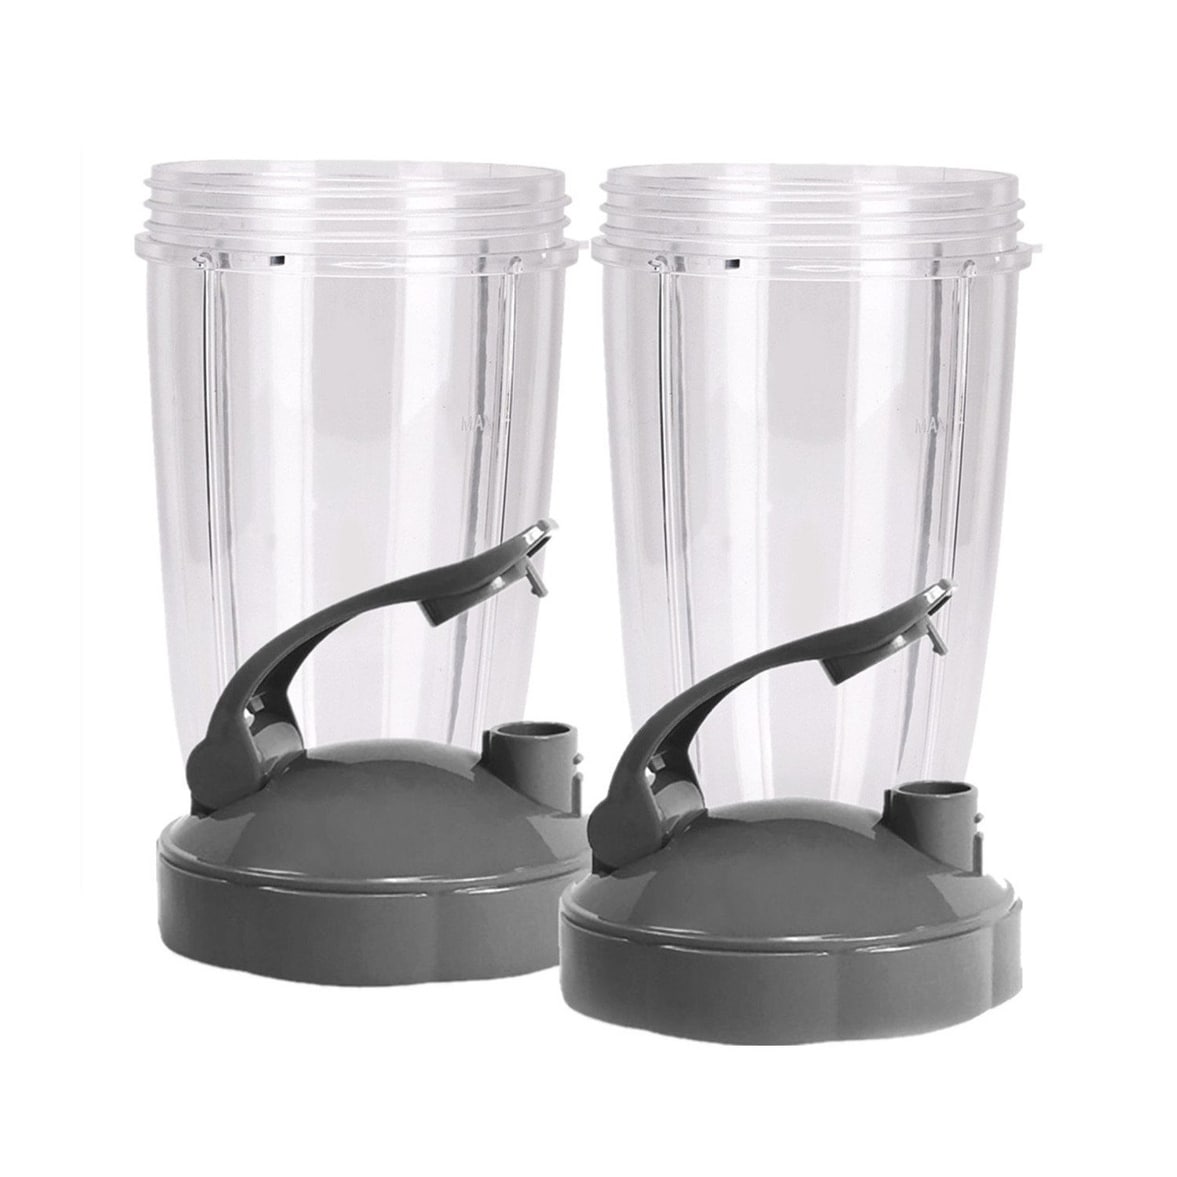 Blendin 2 Pack Replacement 16oz Tall Jar Cups,Fits Original Magic Bullet Blender Juicer